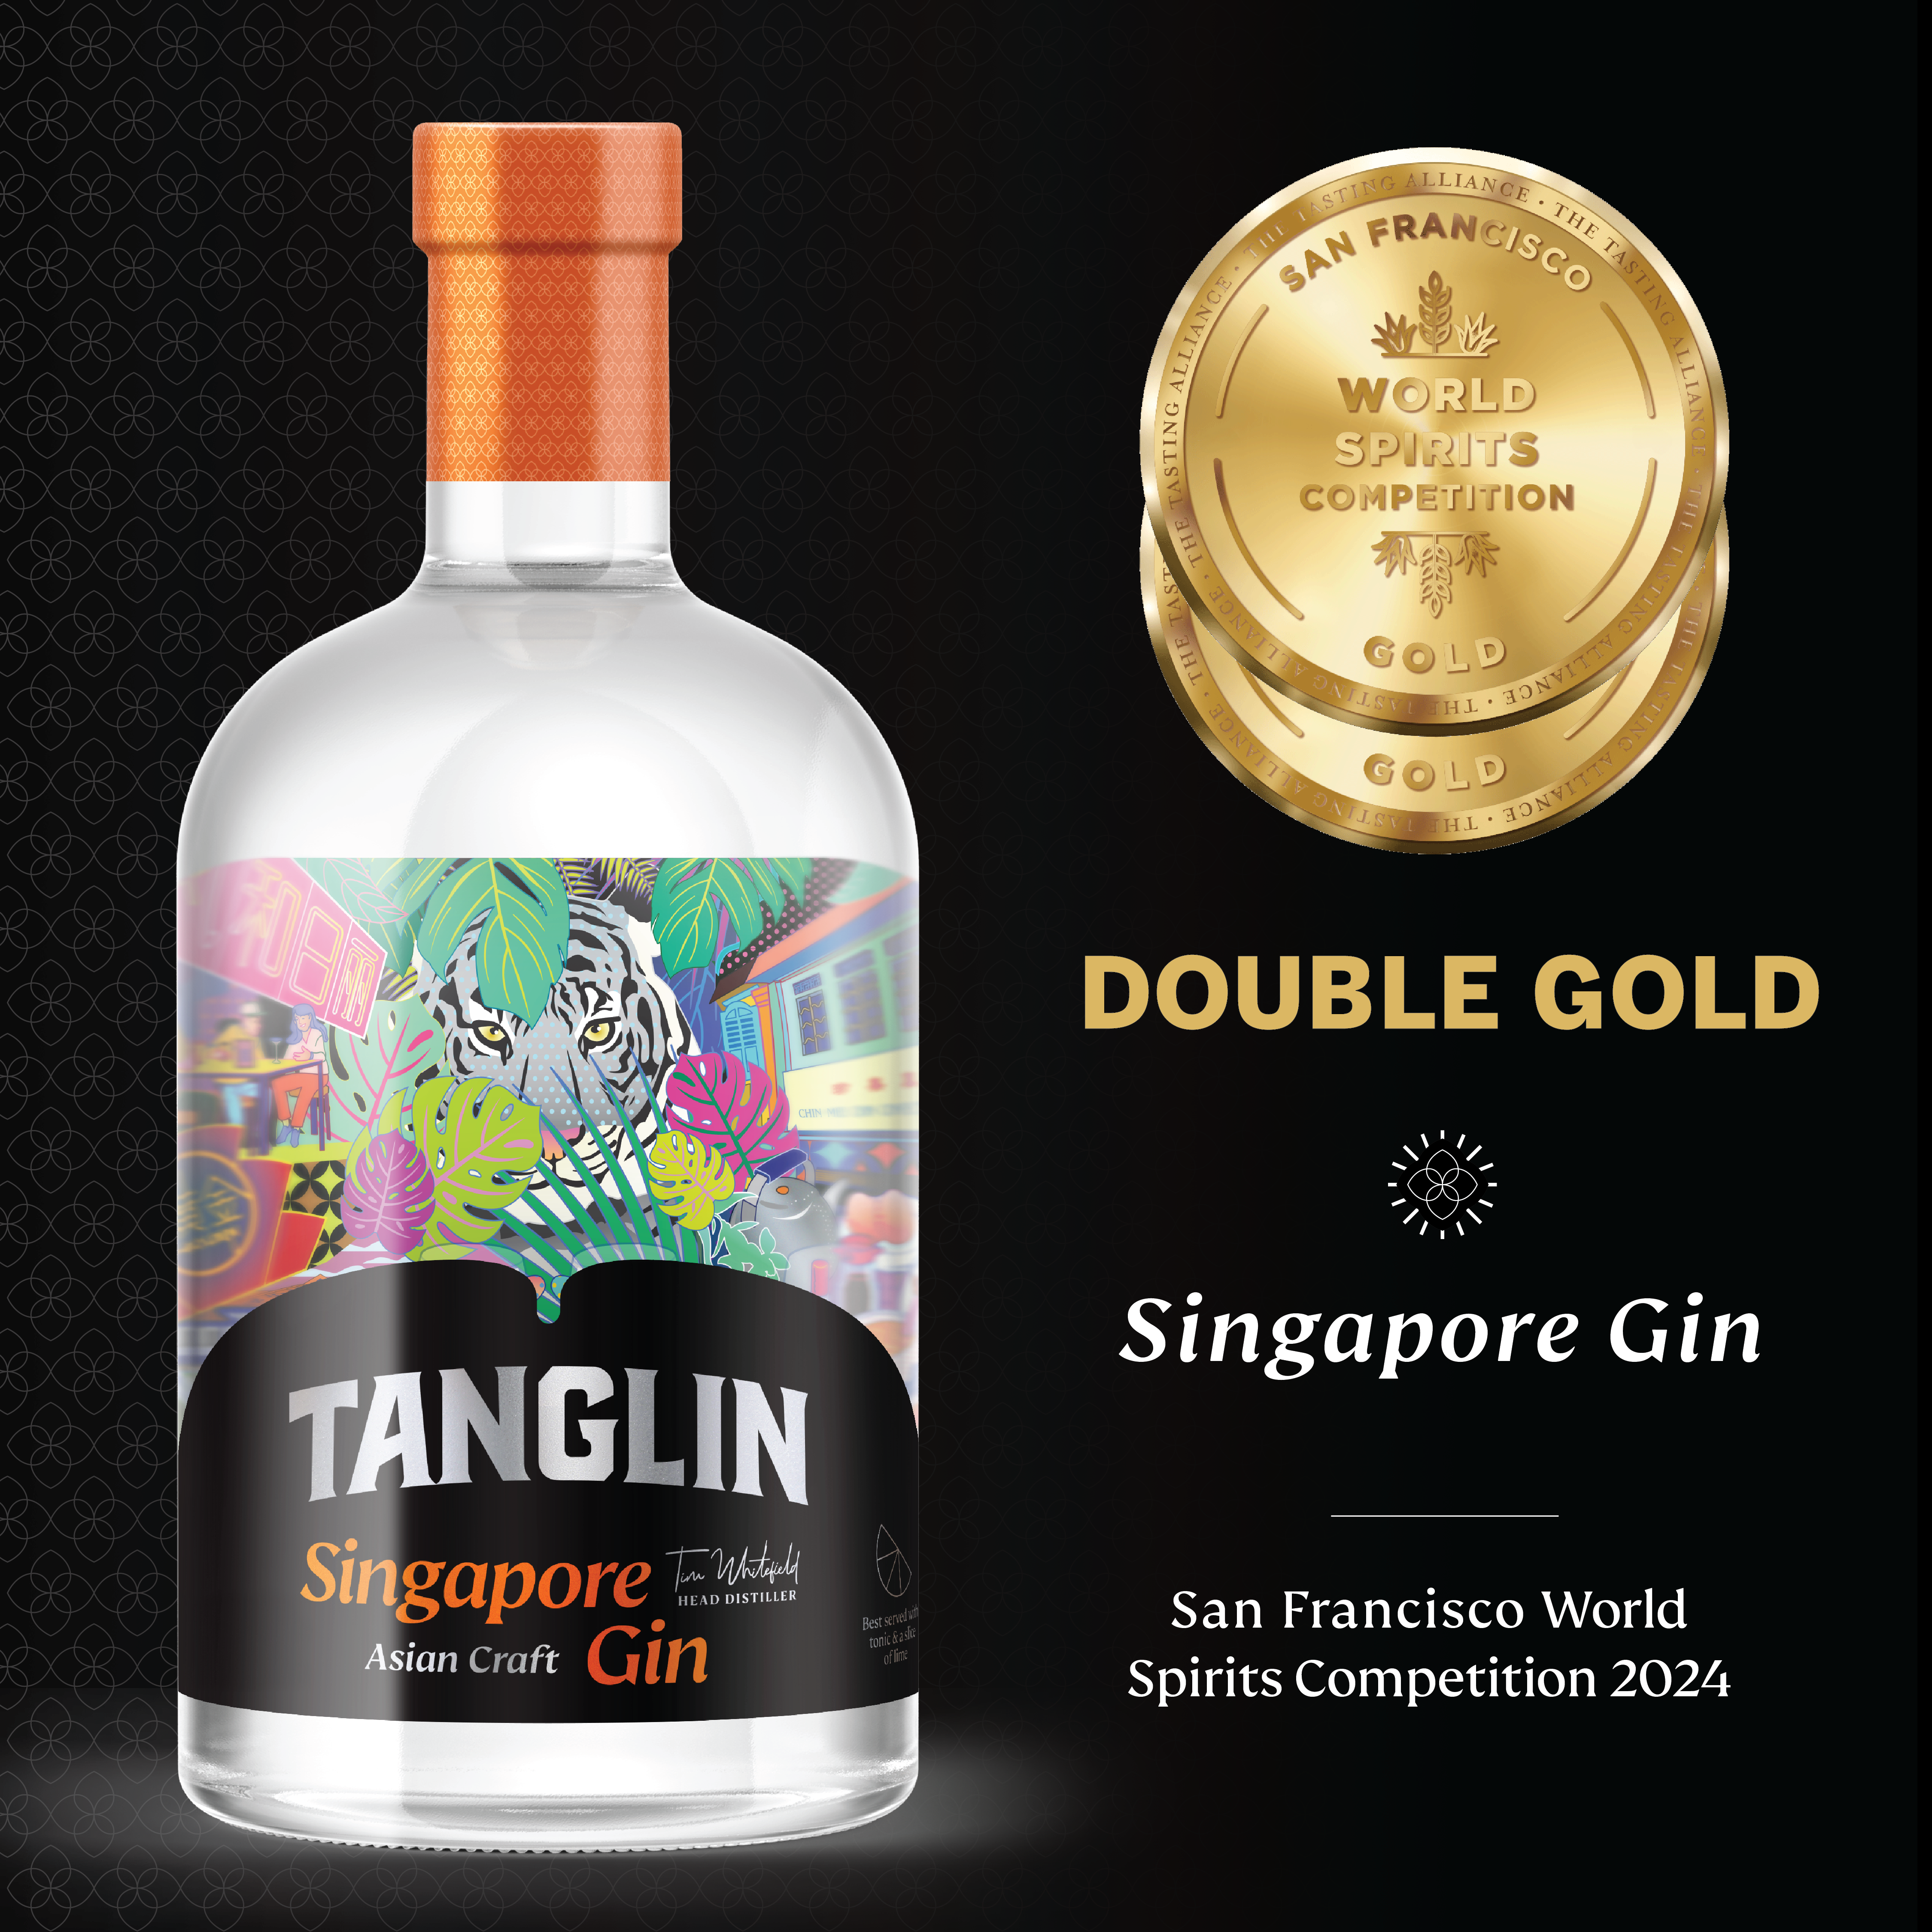 Tanglin Singapore Gin scored an impressive 96 points